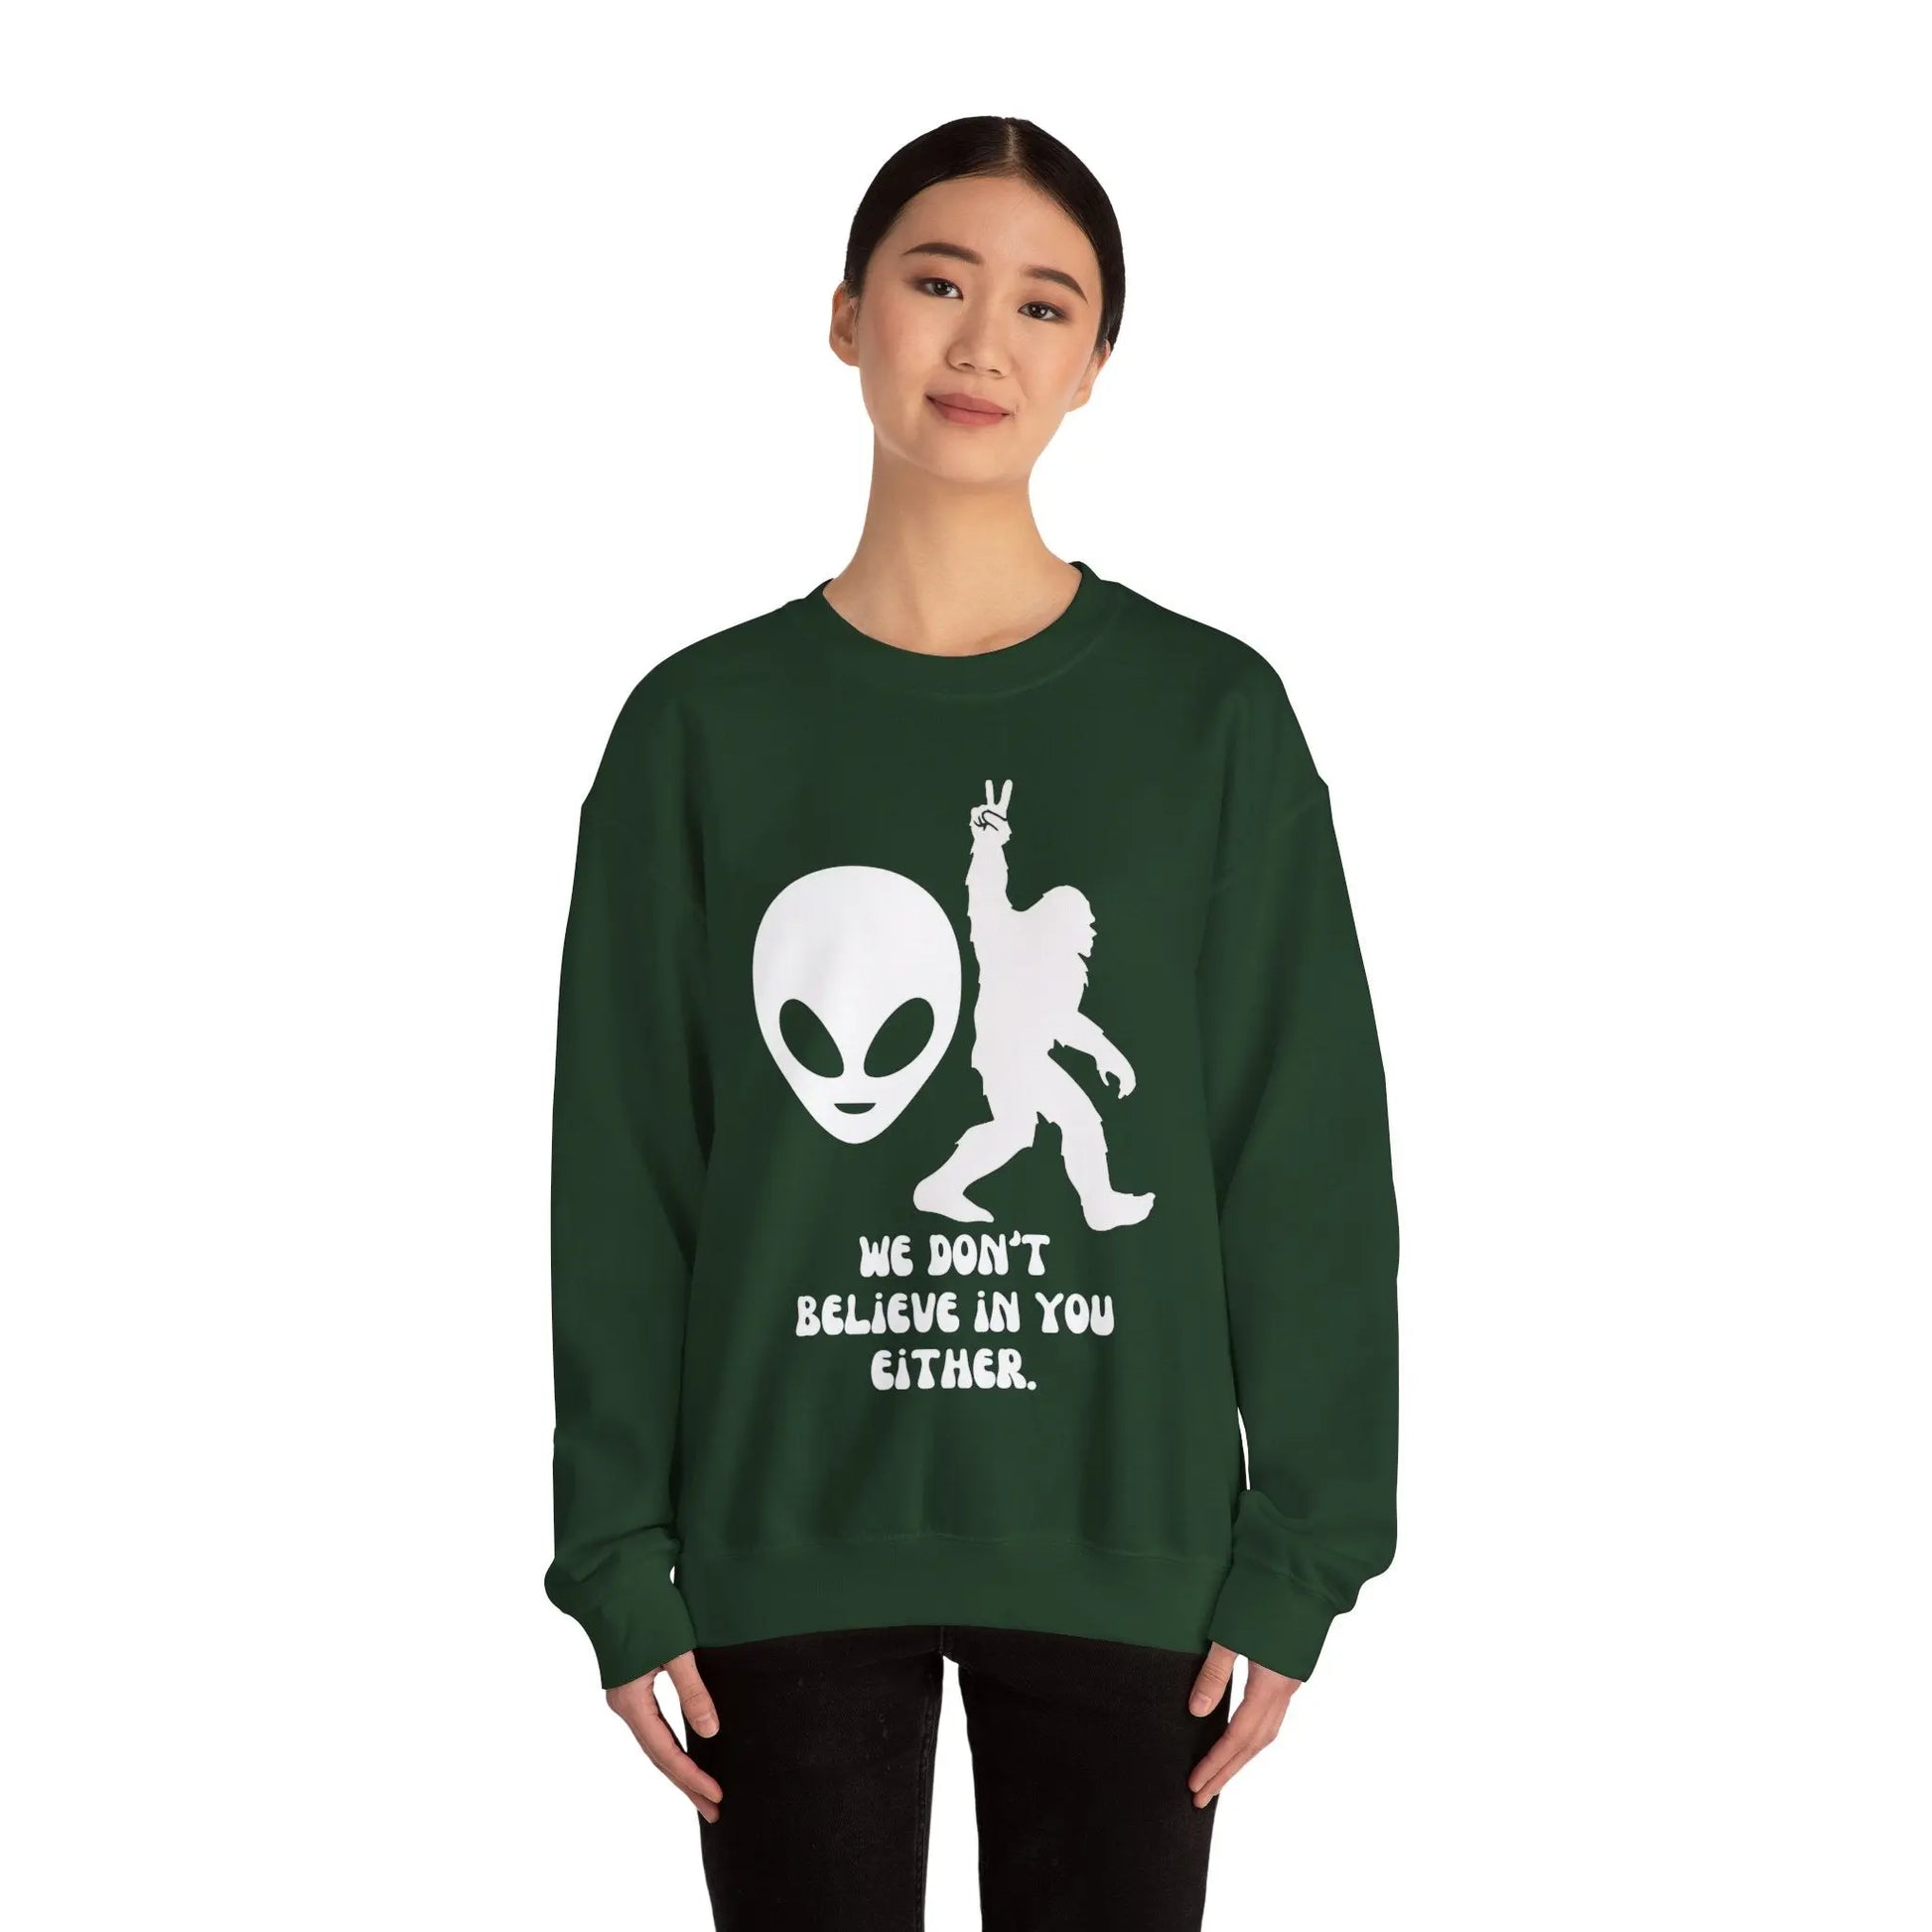 Alien and Bigfoot Sweatshirt “we don’t believe in you either” Printify